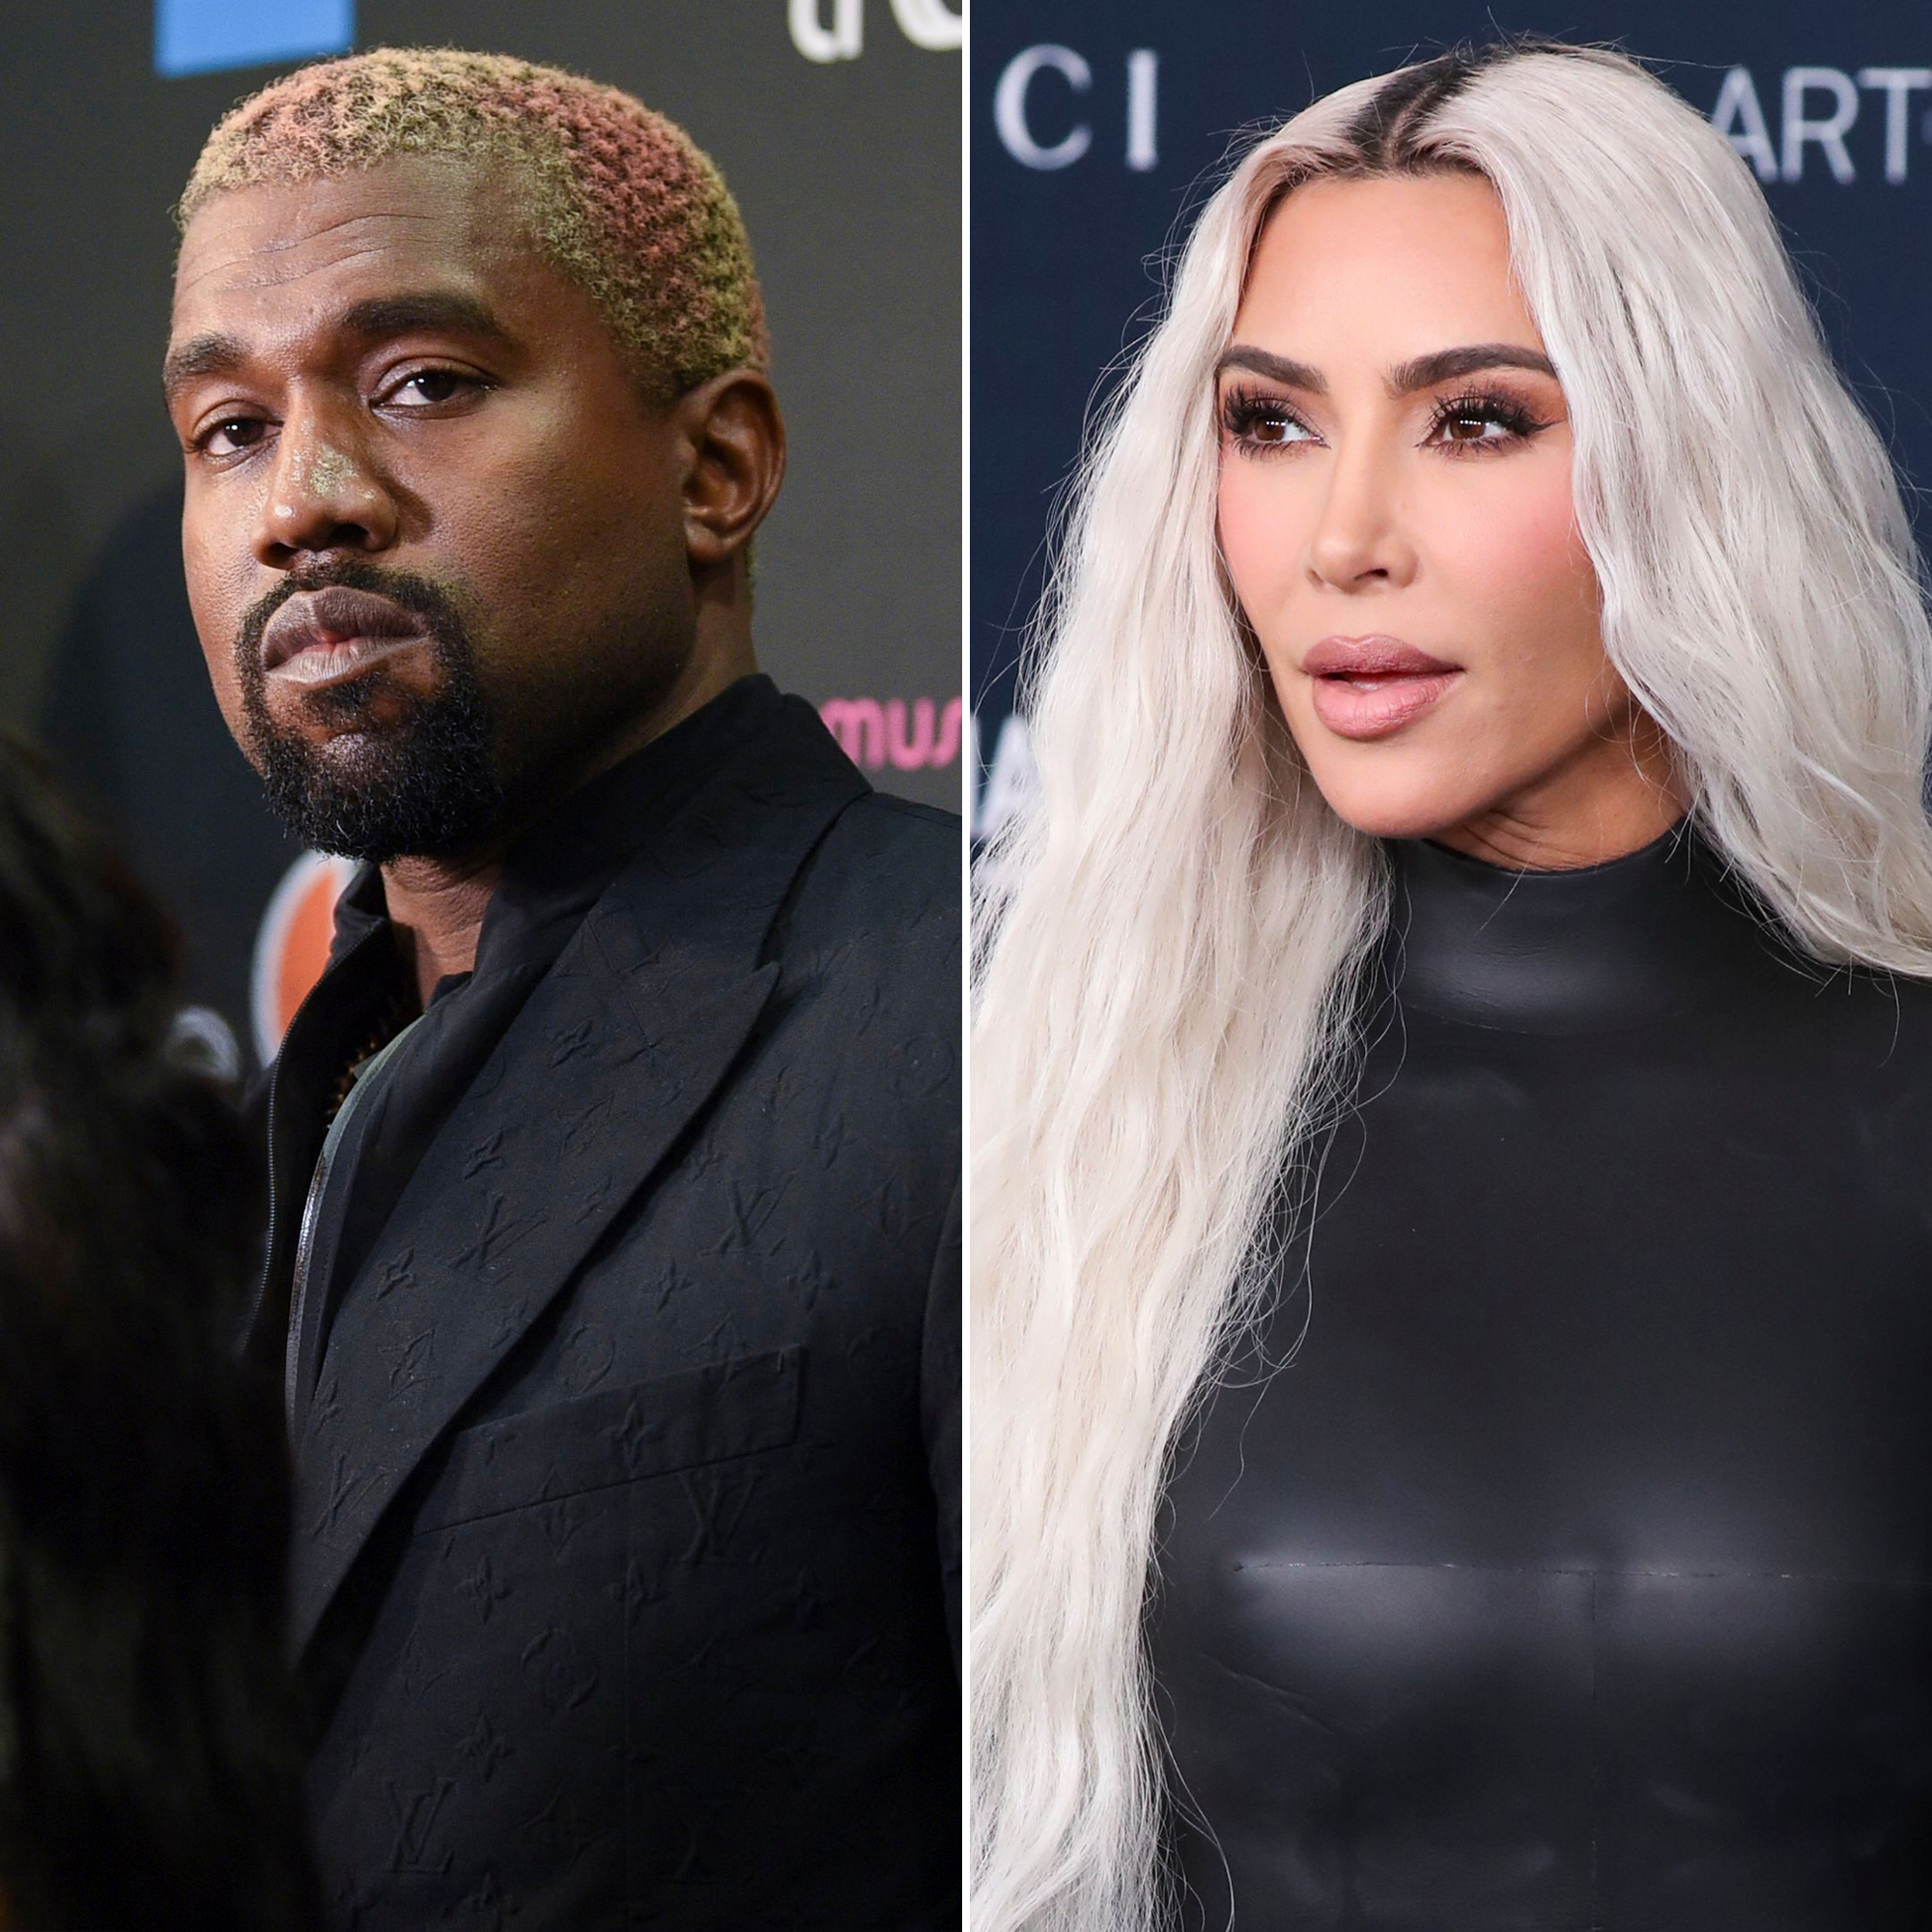 Yeezy Employees Kanye West Showed Nude Photos of Kim Kardashian